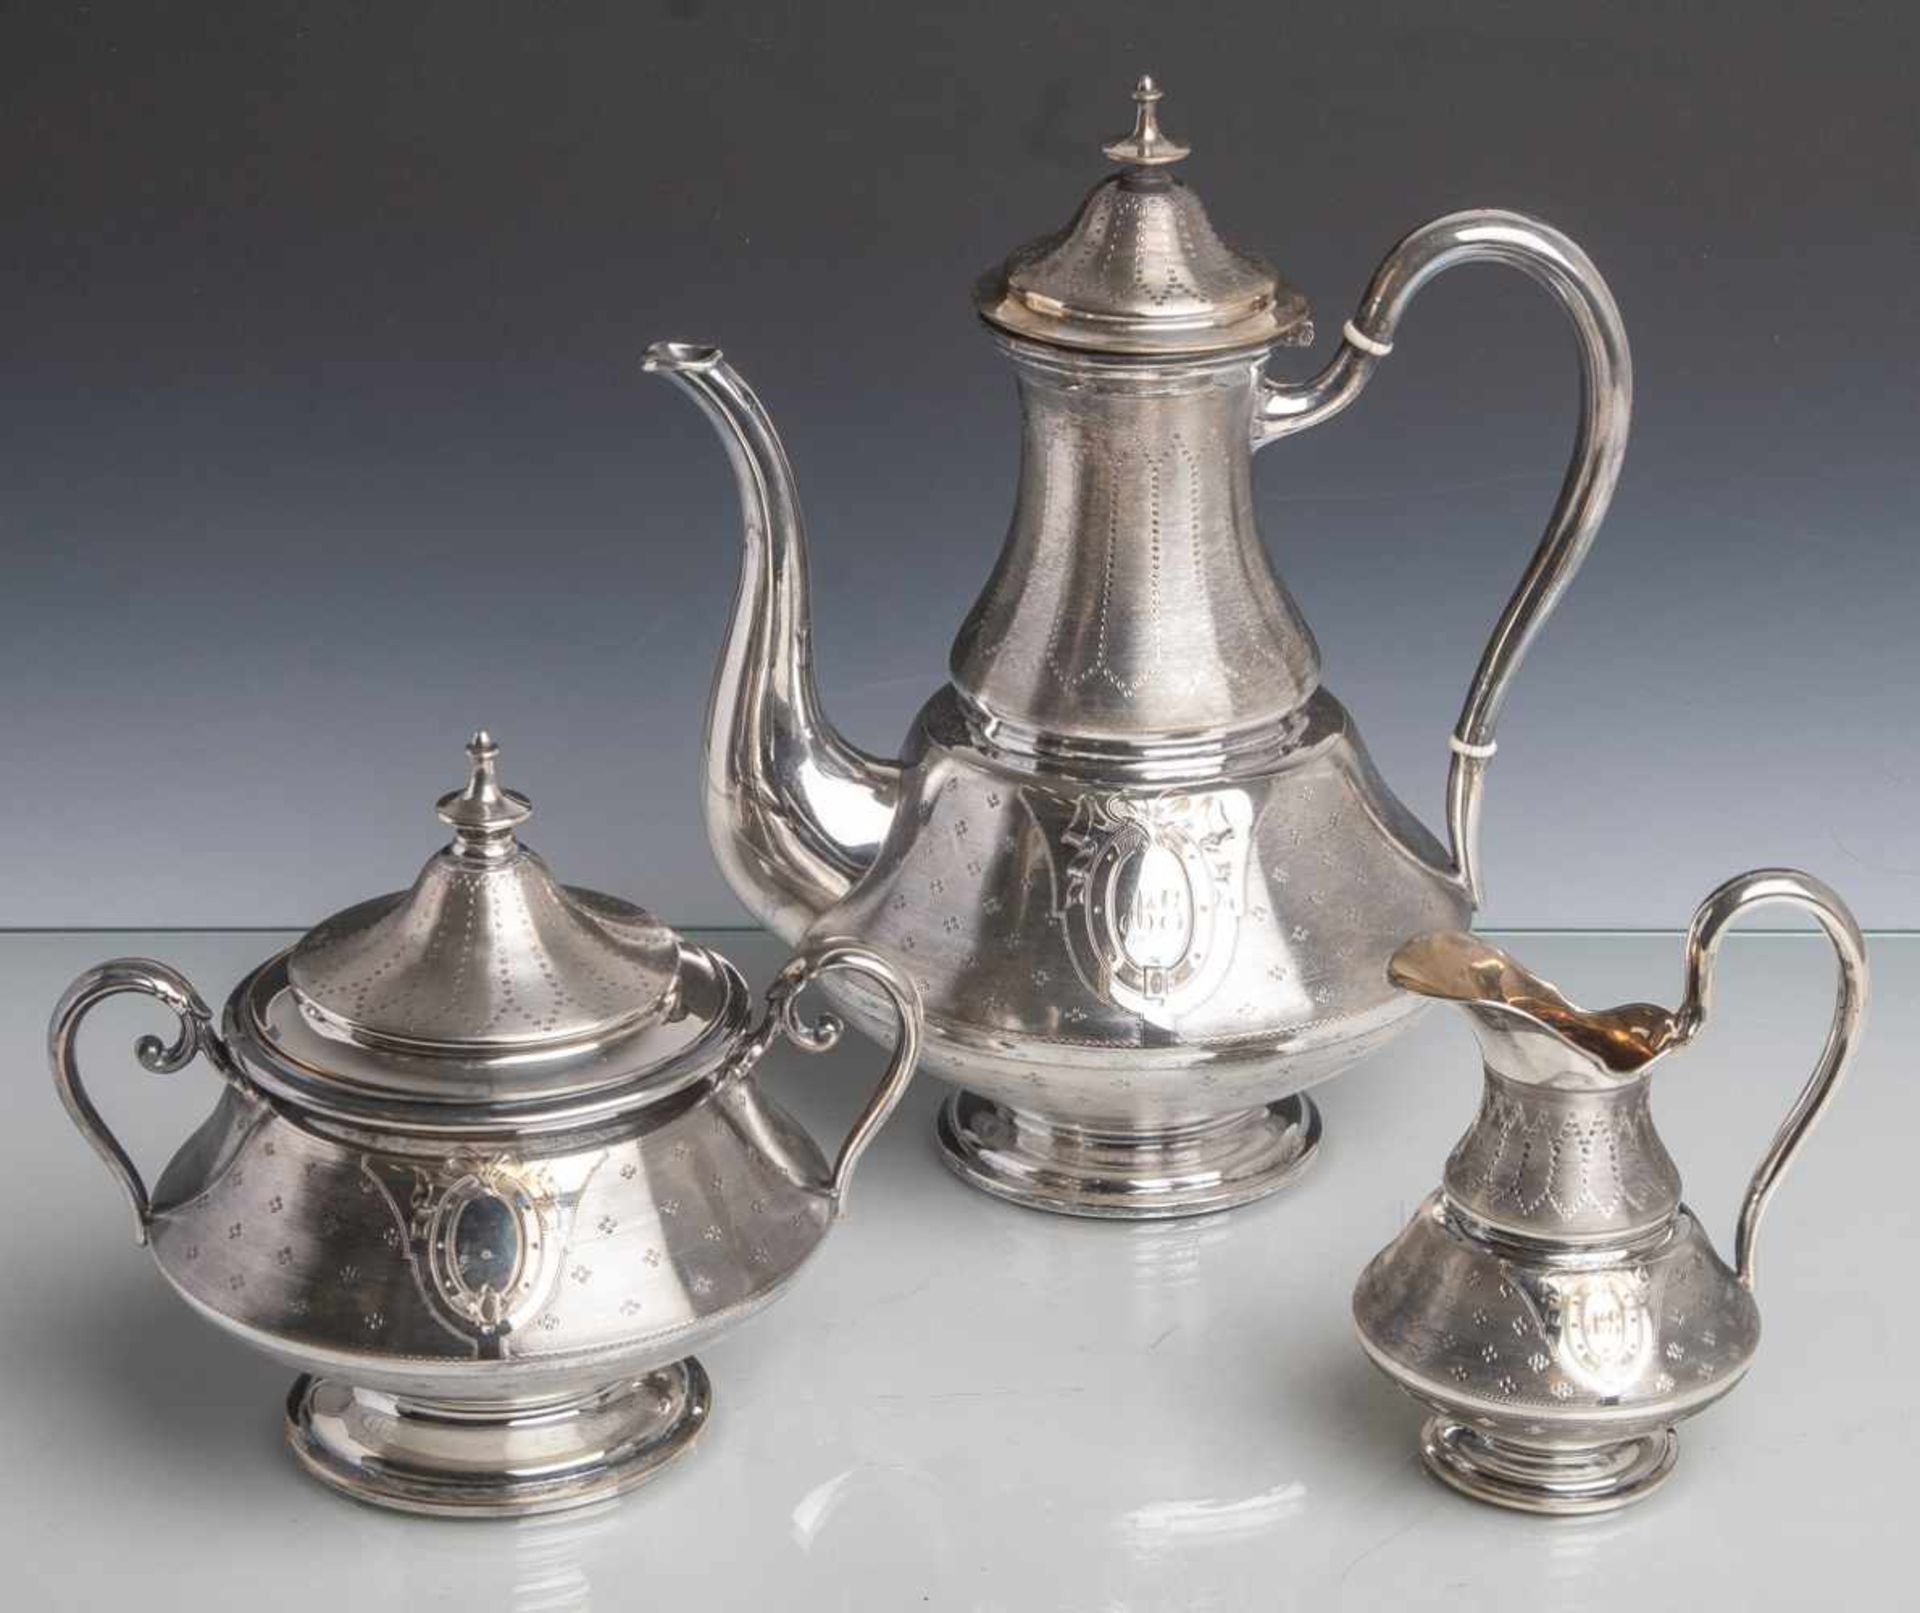 Historismus-Kaffeekern, Silber 800, wohl Belgien Ende 19. Jahrhundert, gepunzt: 800M,3-teilig,